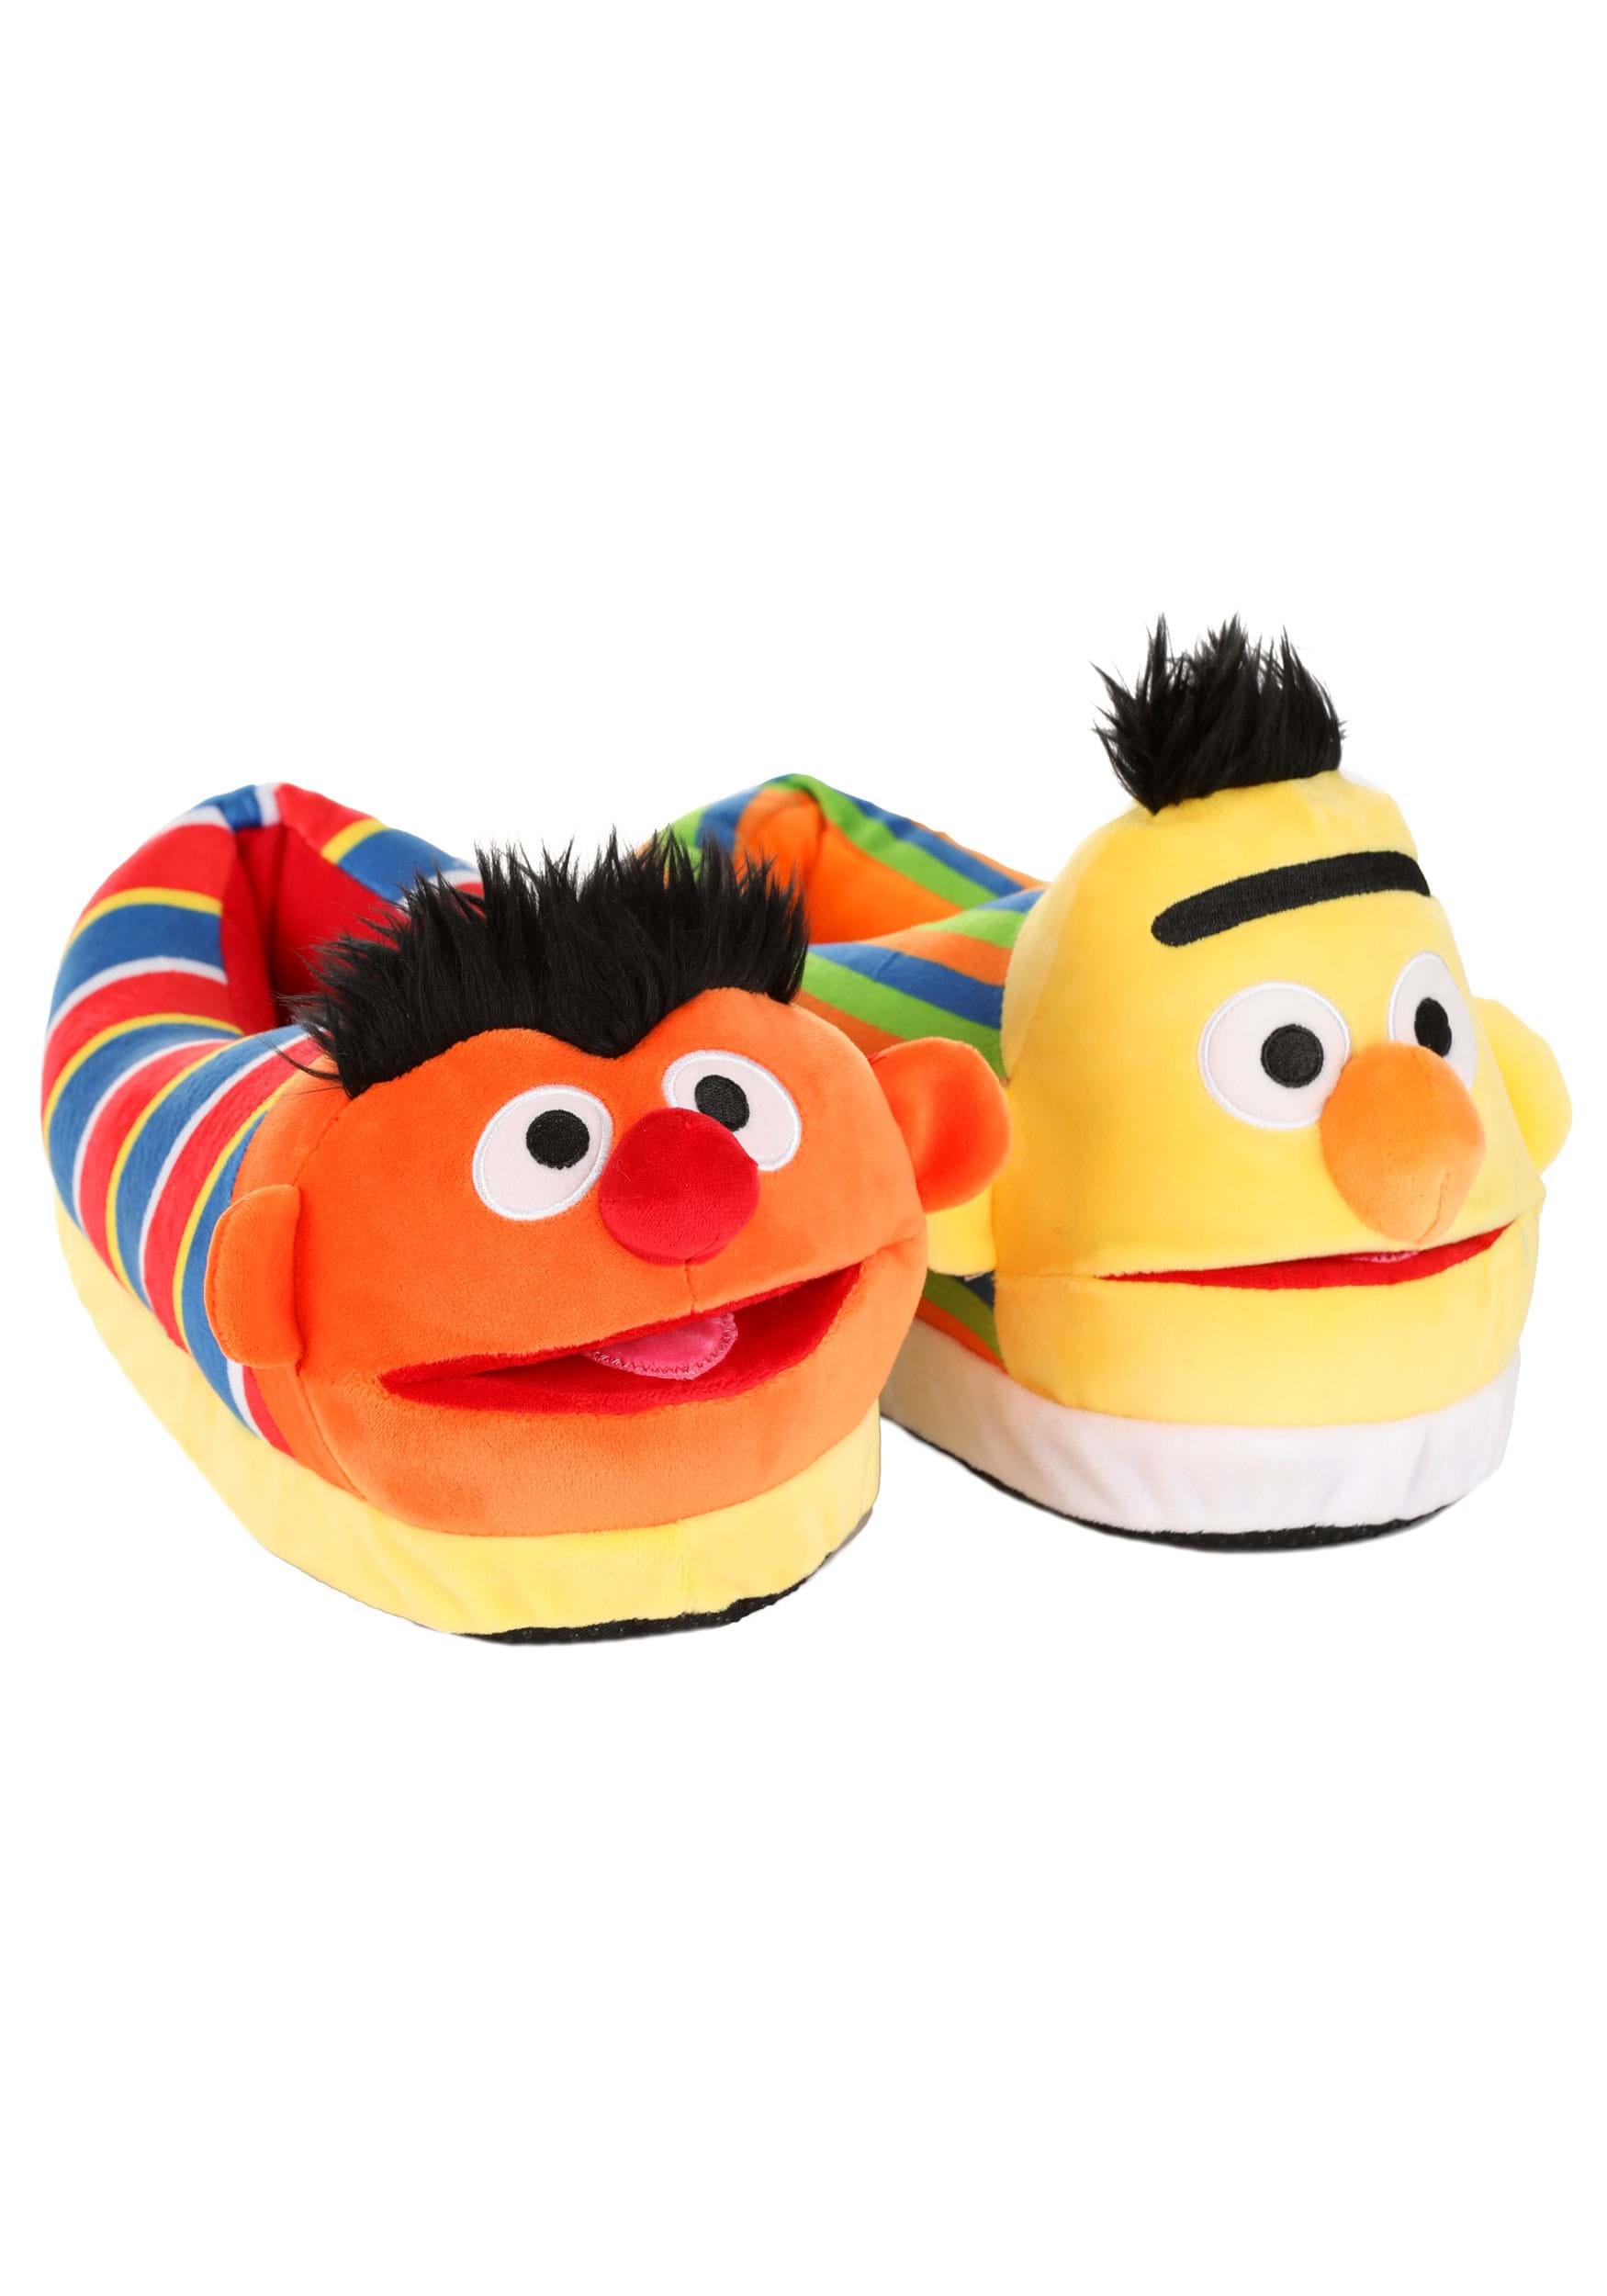 Bert & Ernie Plush Slippers for Adults | Sesame Street Gifts